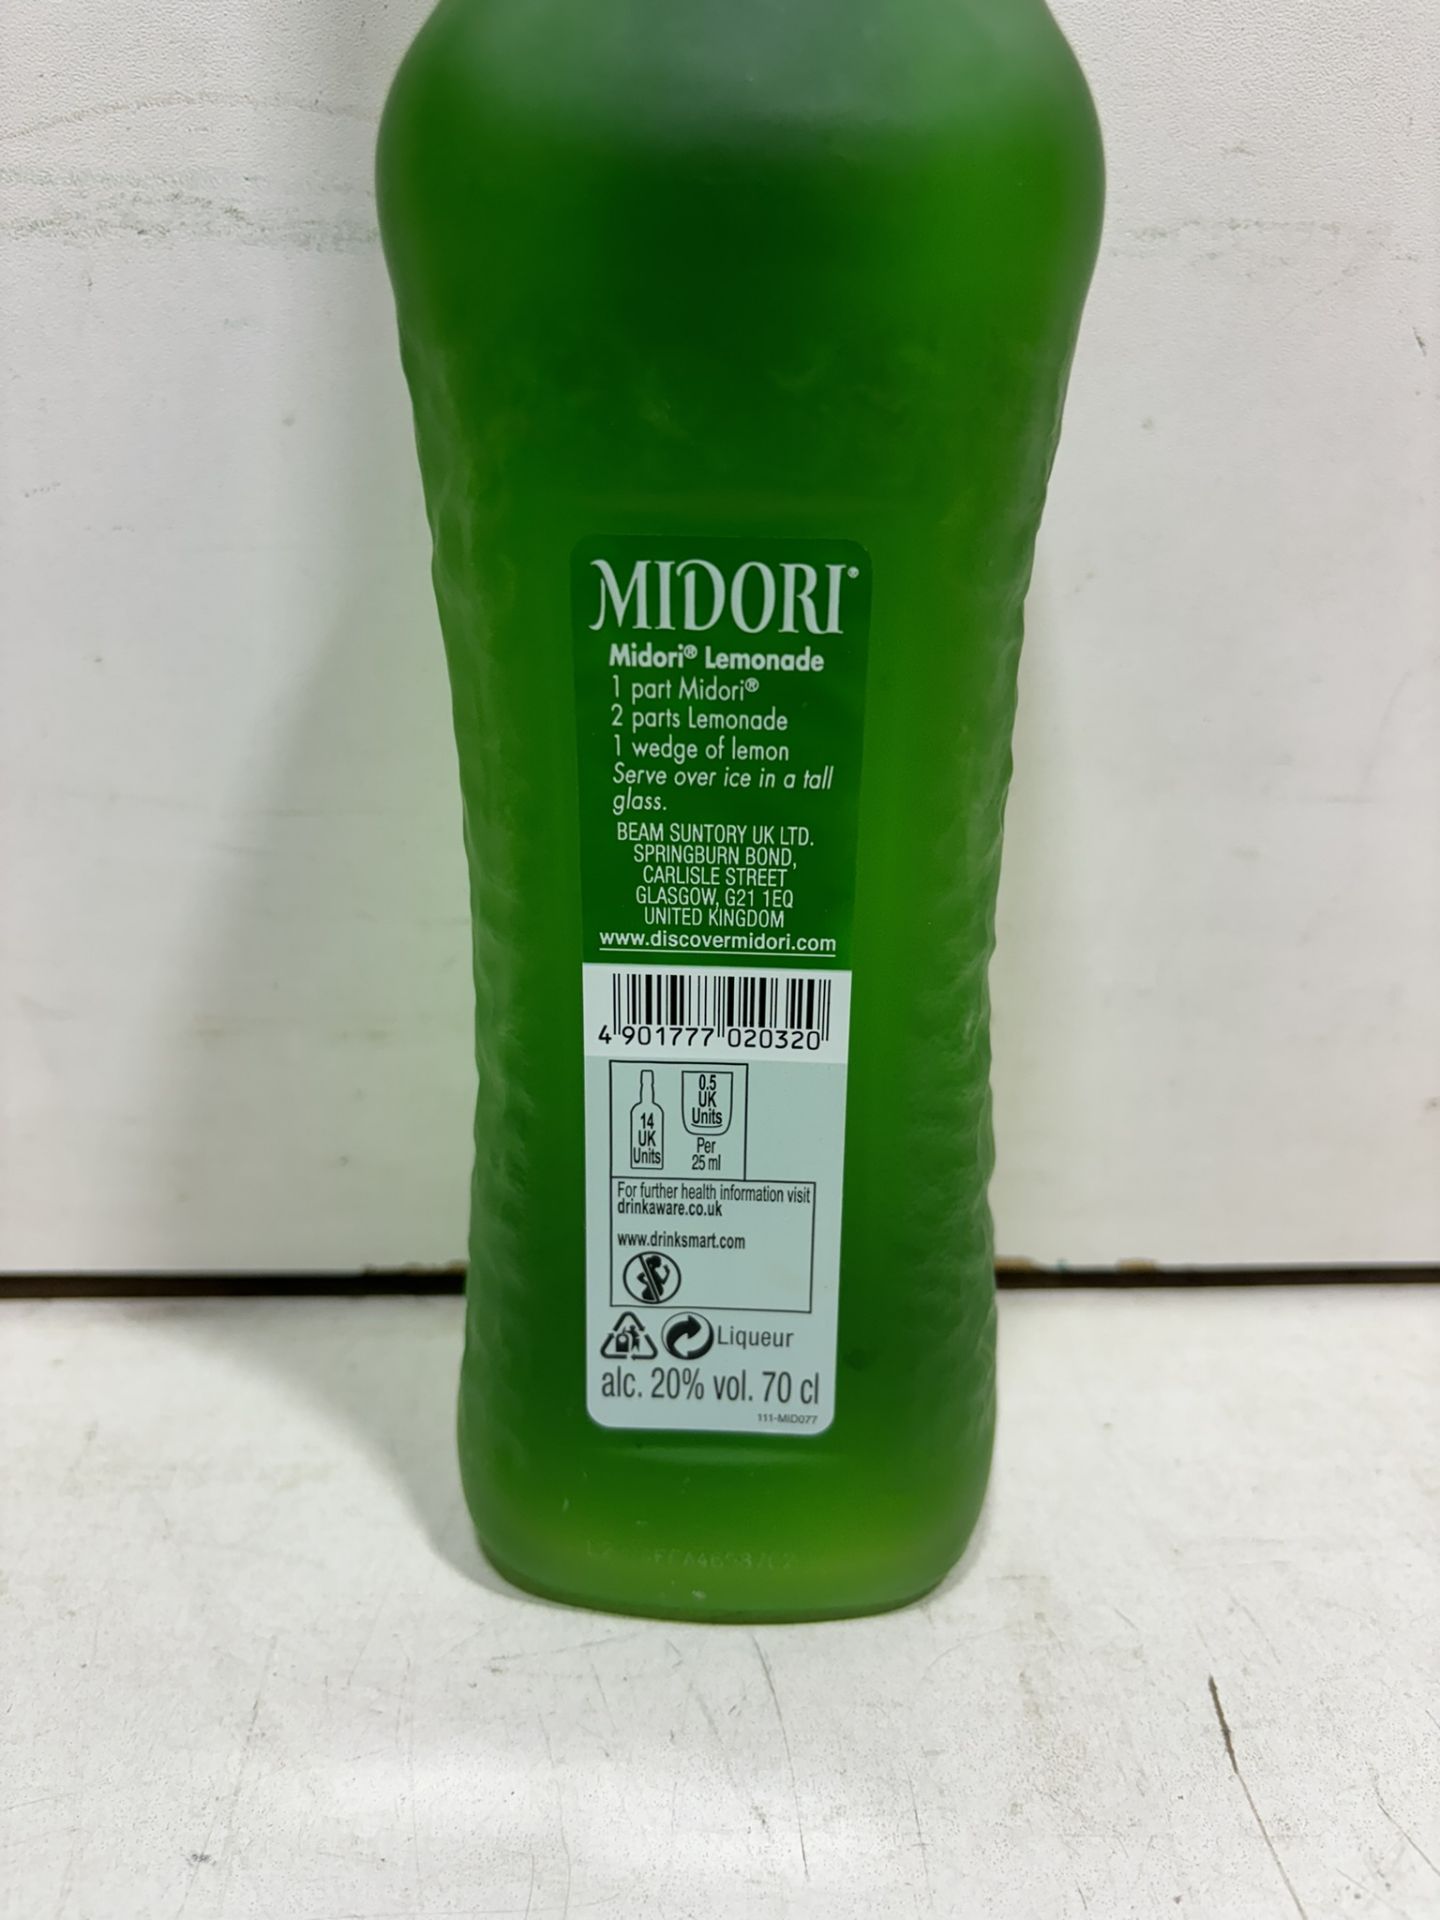 4 X Bottles Of Midori Melon Liqueur 70Cl - Image 3 of 3